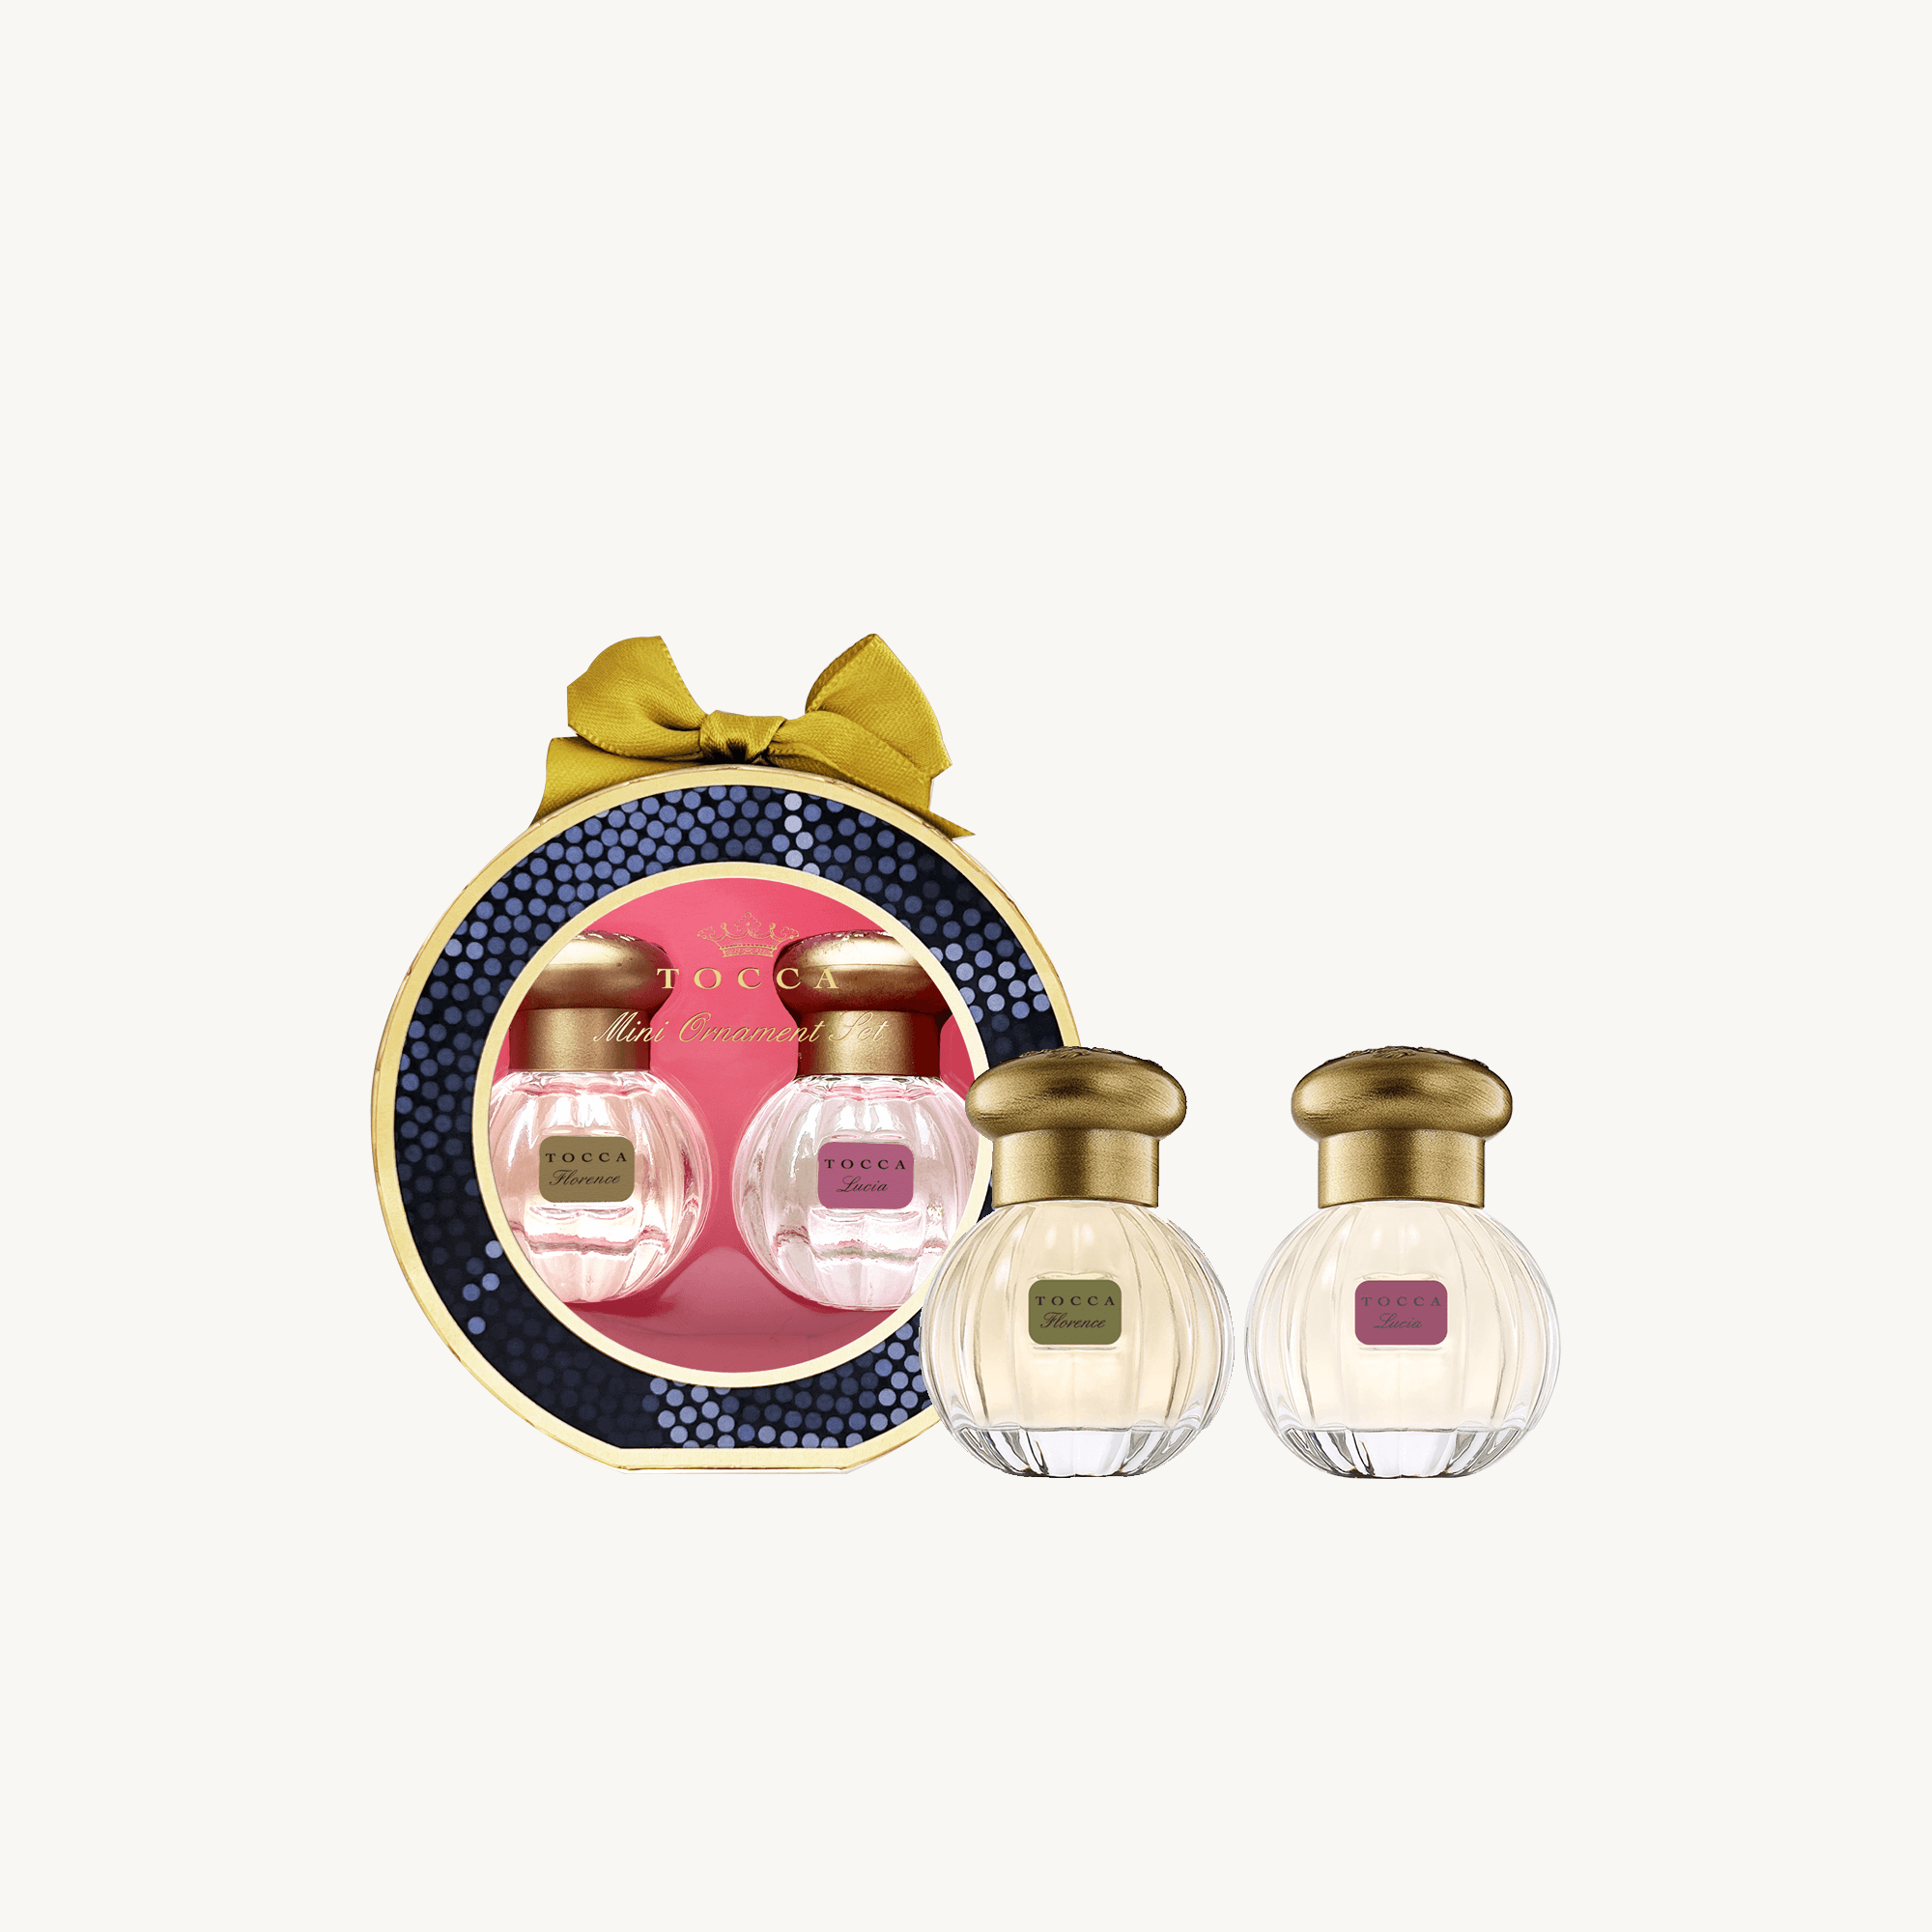 Tocca Mini Perfume Collection Set